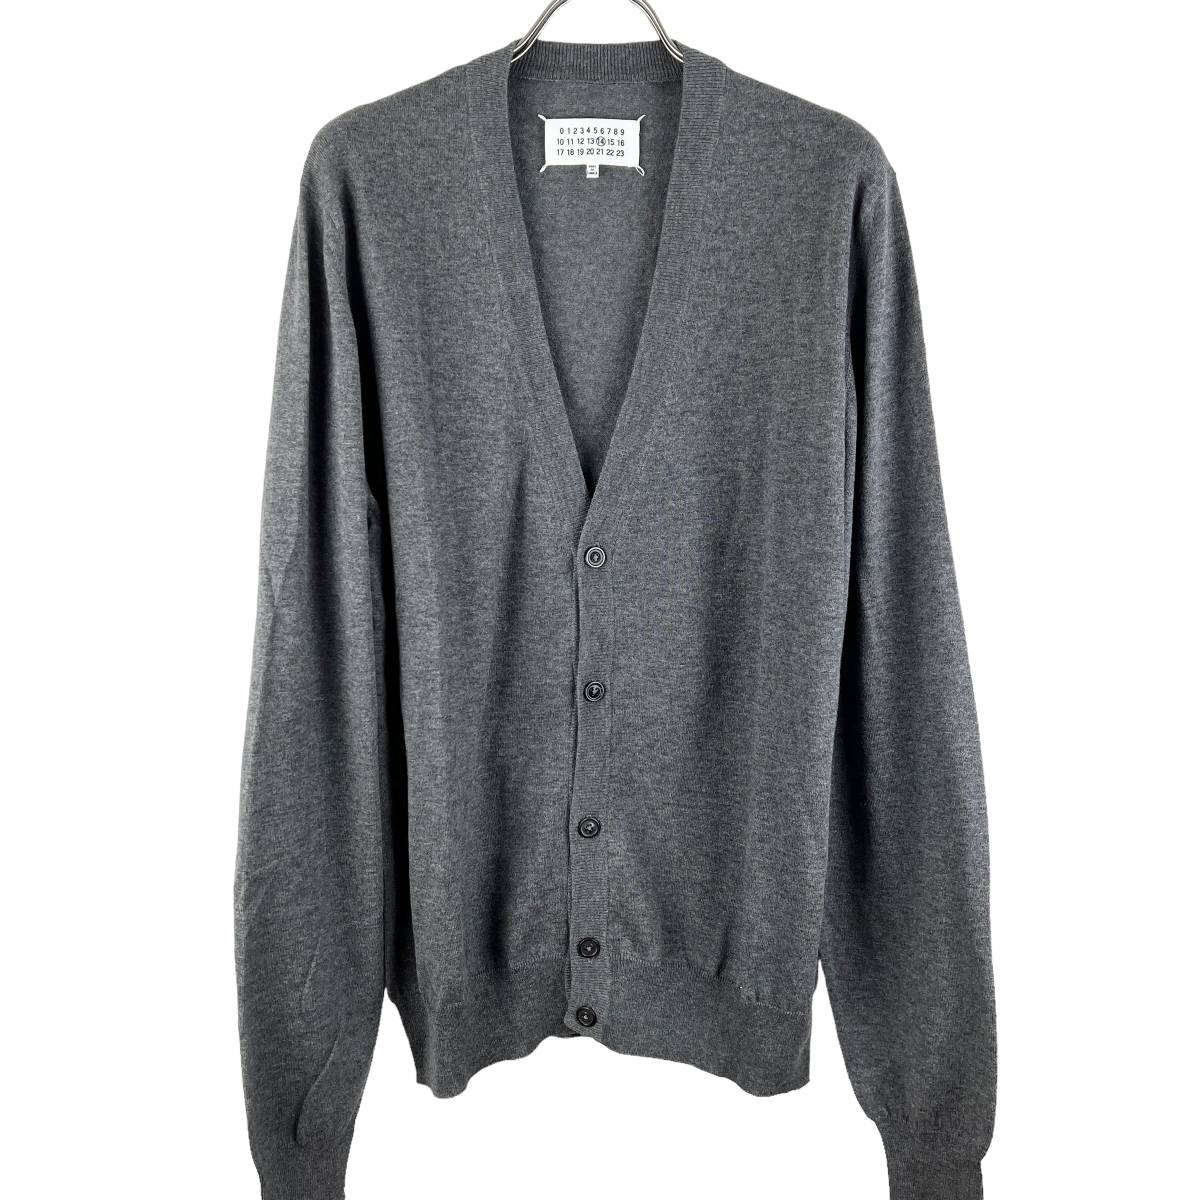 Maison Margiela (メゾン マルジェラ) Patched Sleeve Knit Cardigan (grey)